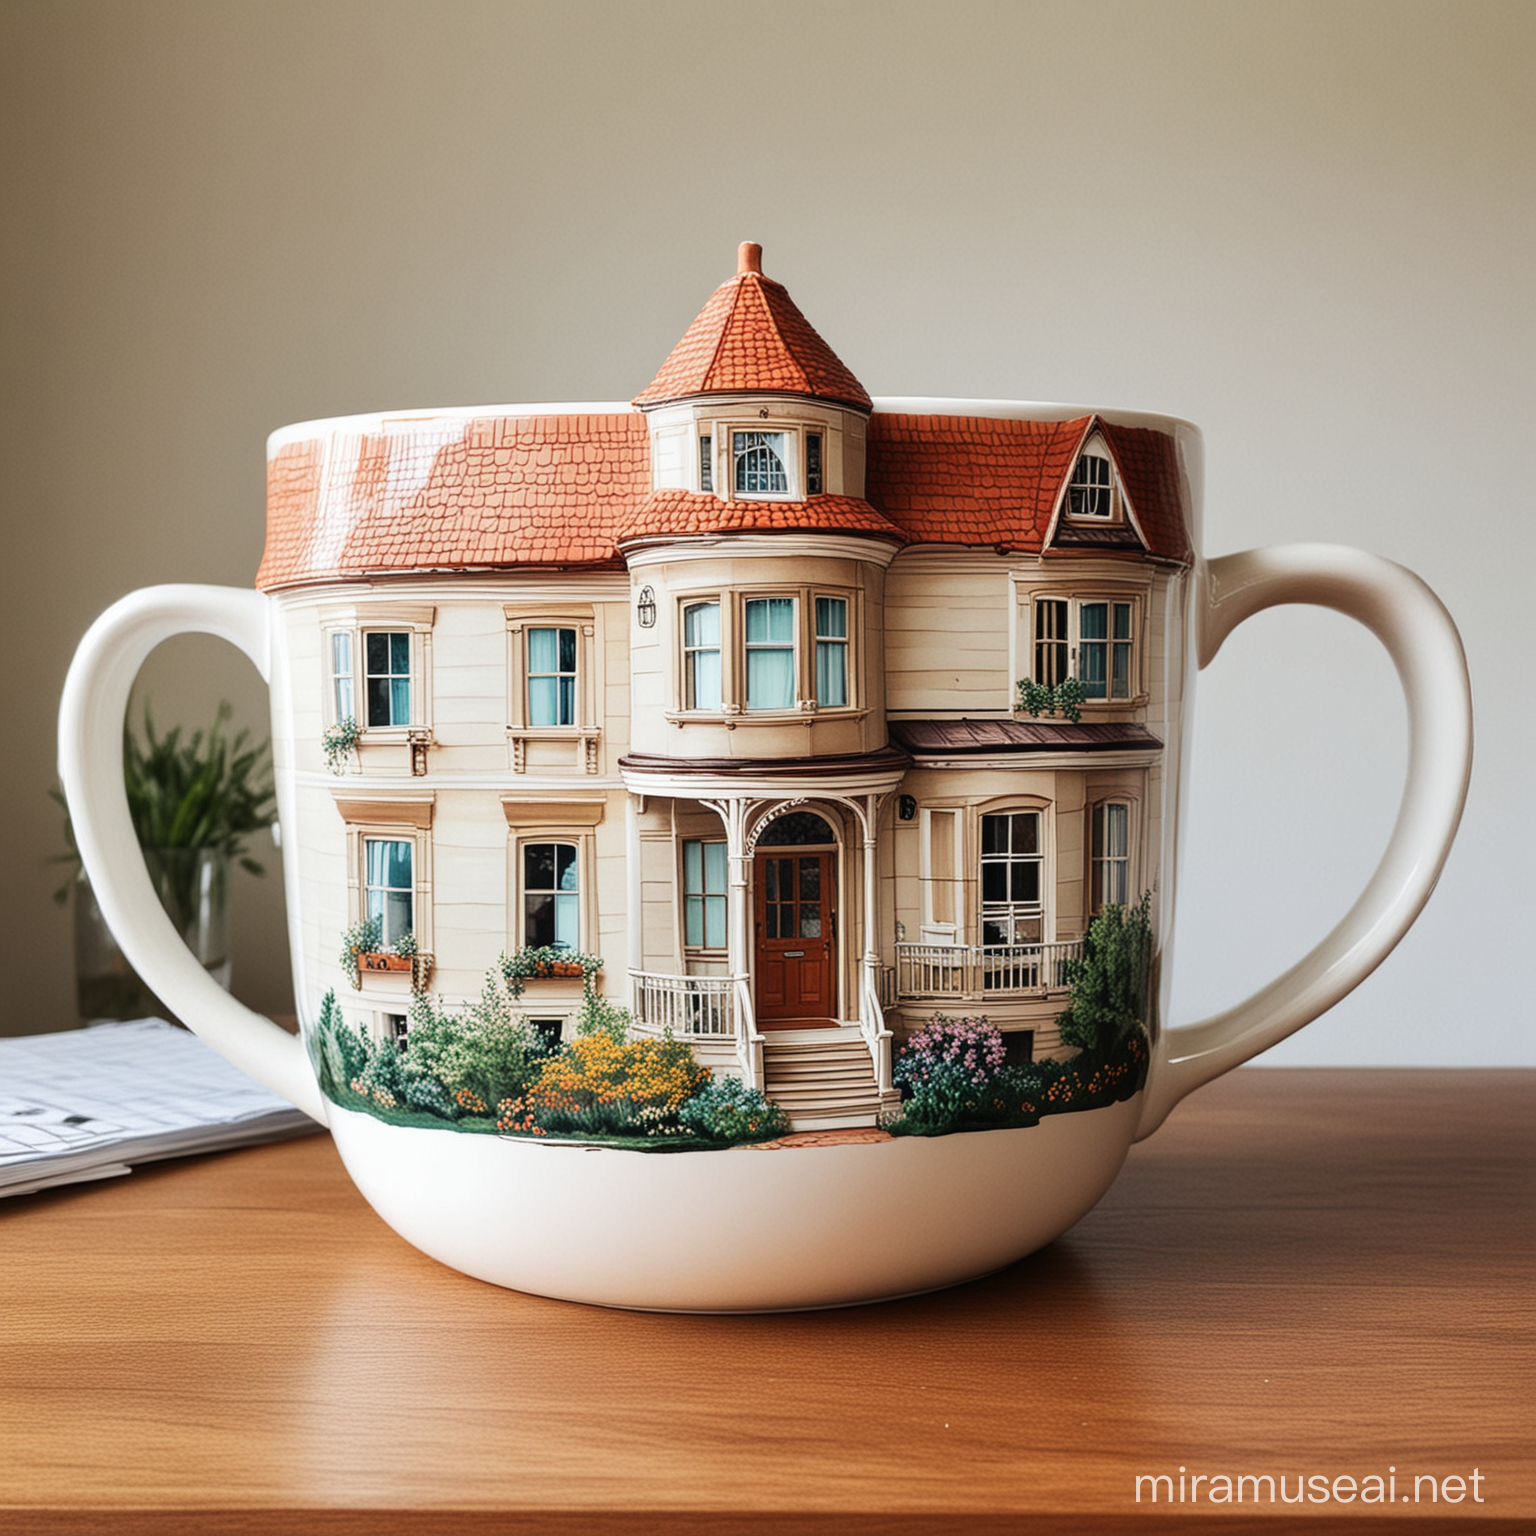 Enormous Coffee Mug Housing Beautiful Miniature Dwelling